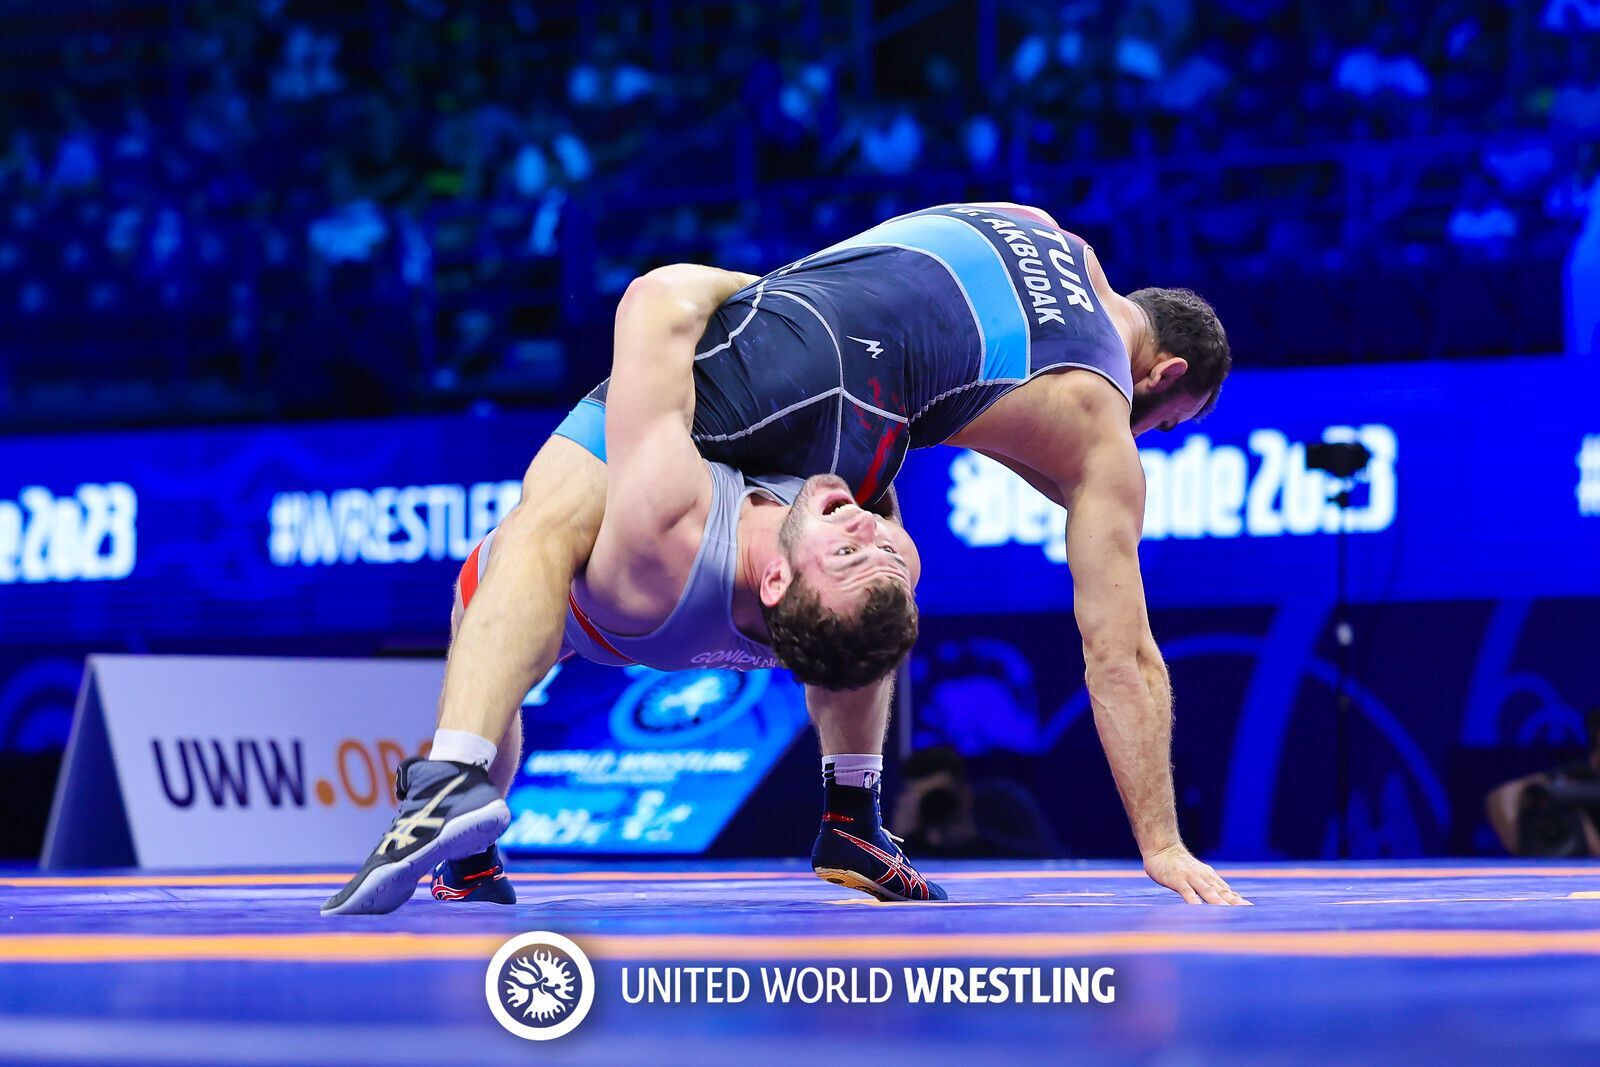 Ukrainian wrestler showed his attitude towards Russians at the World Championships